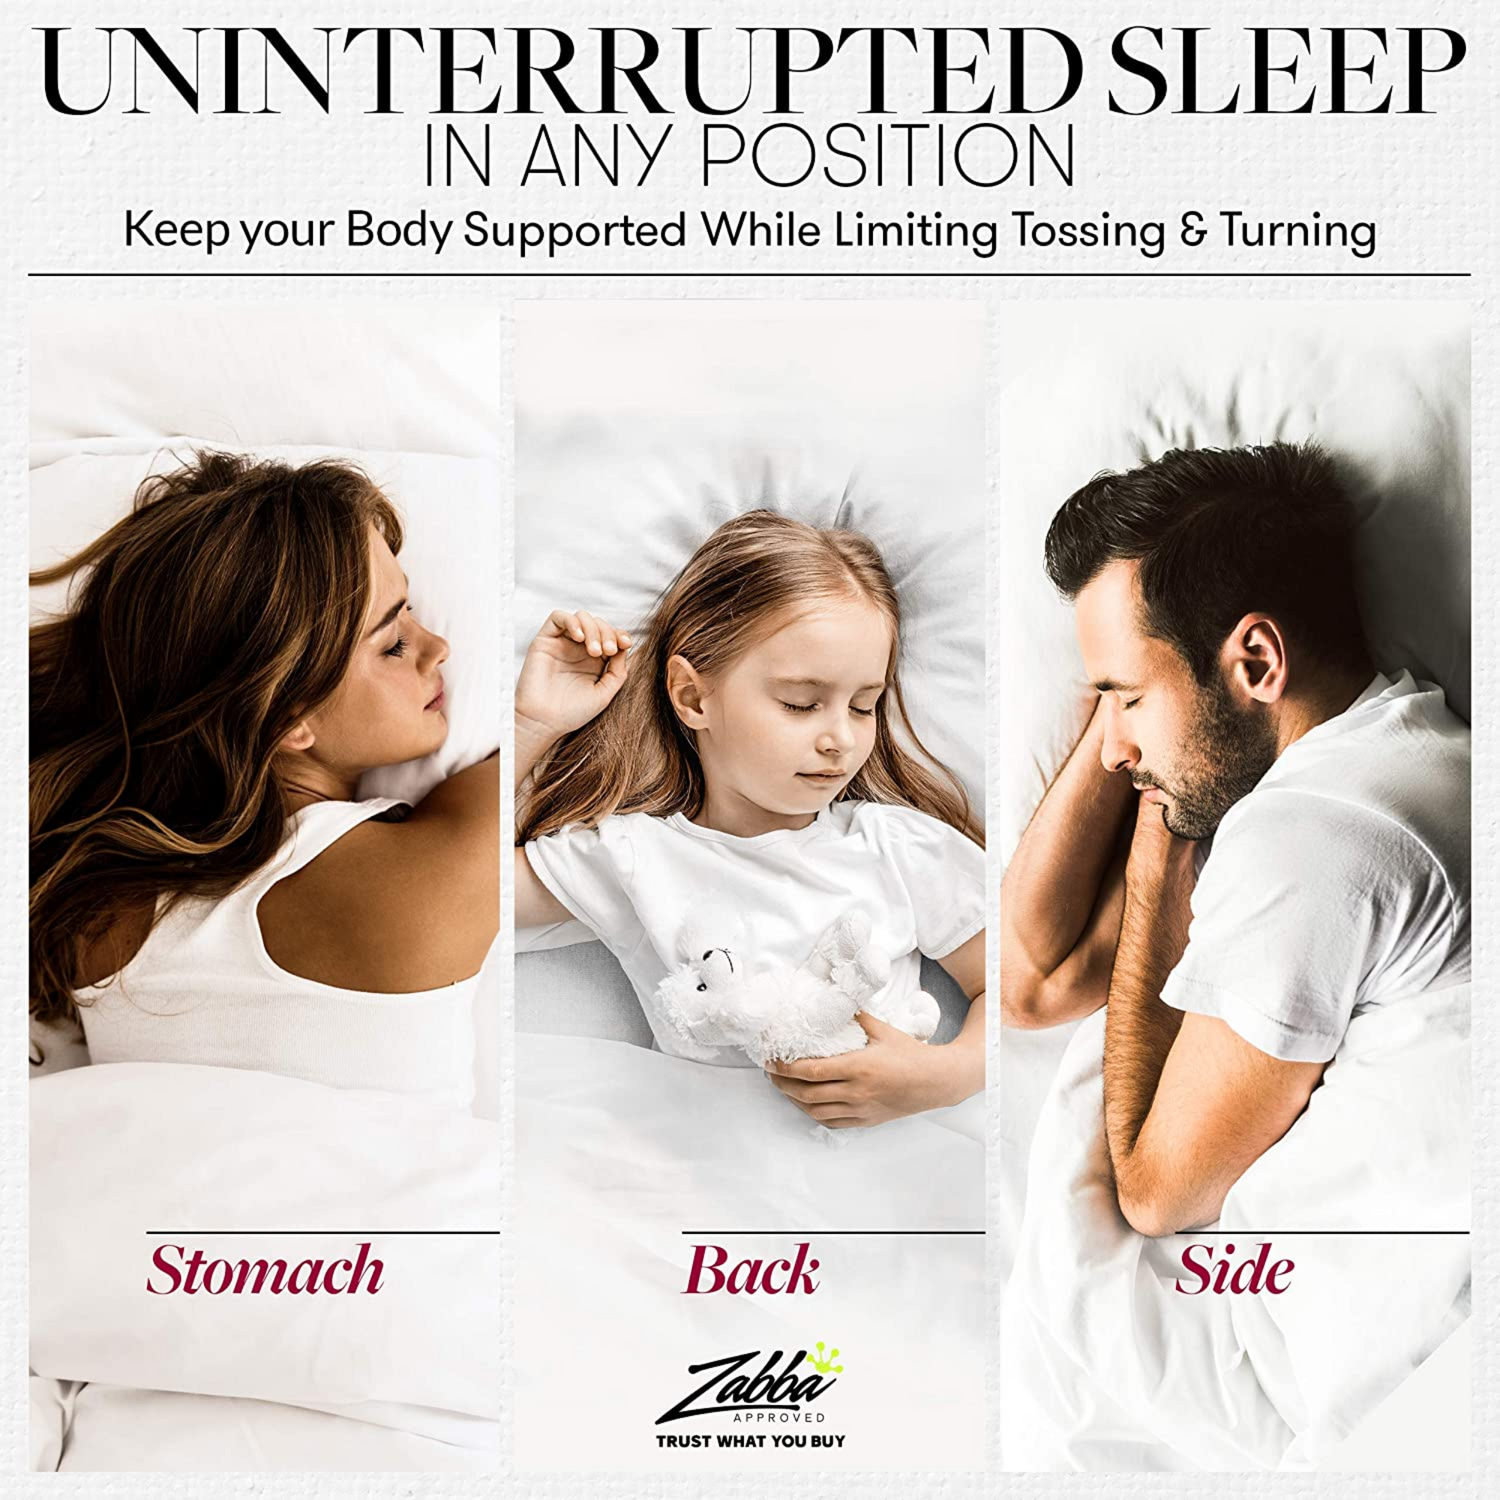 20" x 36" Luxury King Bed Pillow - American Comfort Luxury Linens